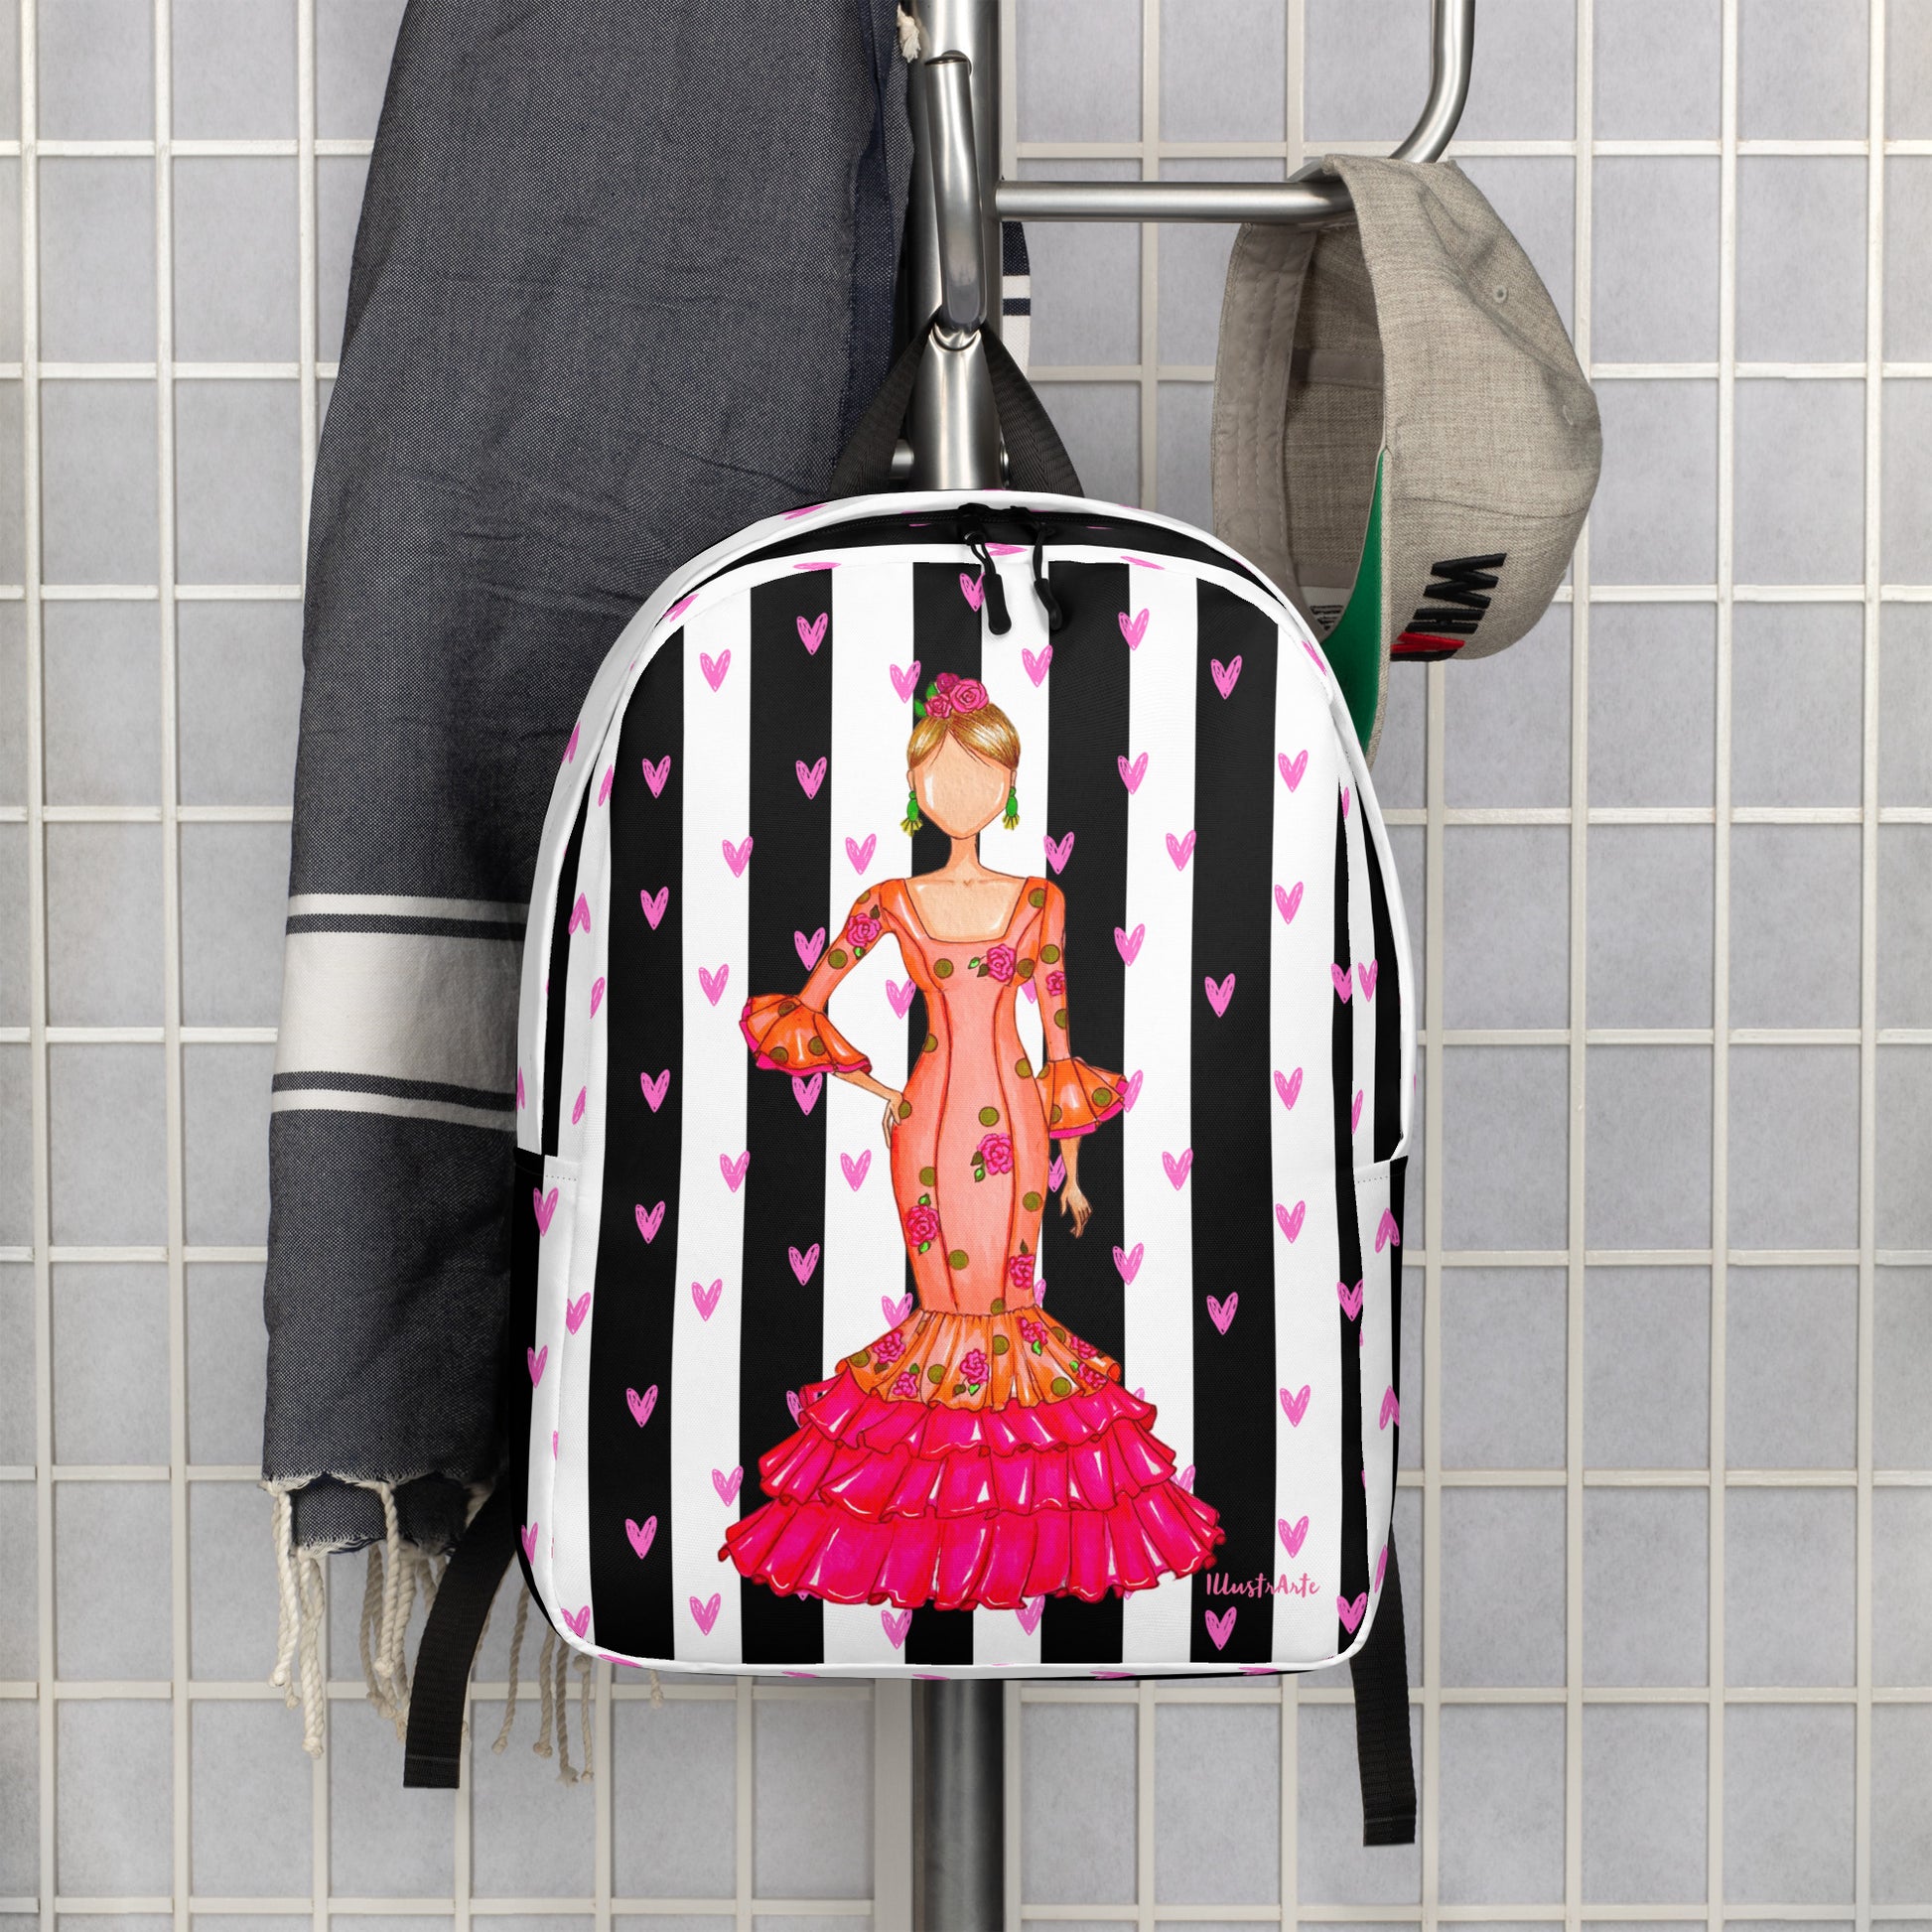 Flamenco Dancer Backpack, orange dress with pink hearts and black and white stripe design. - IllustrArte